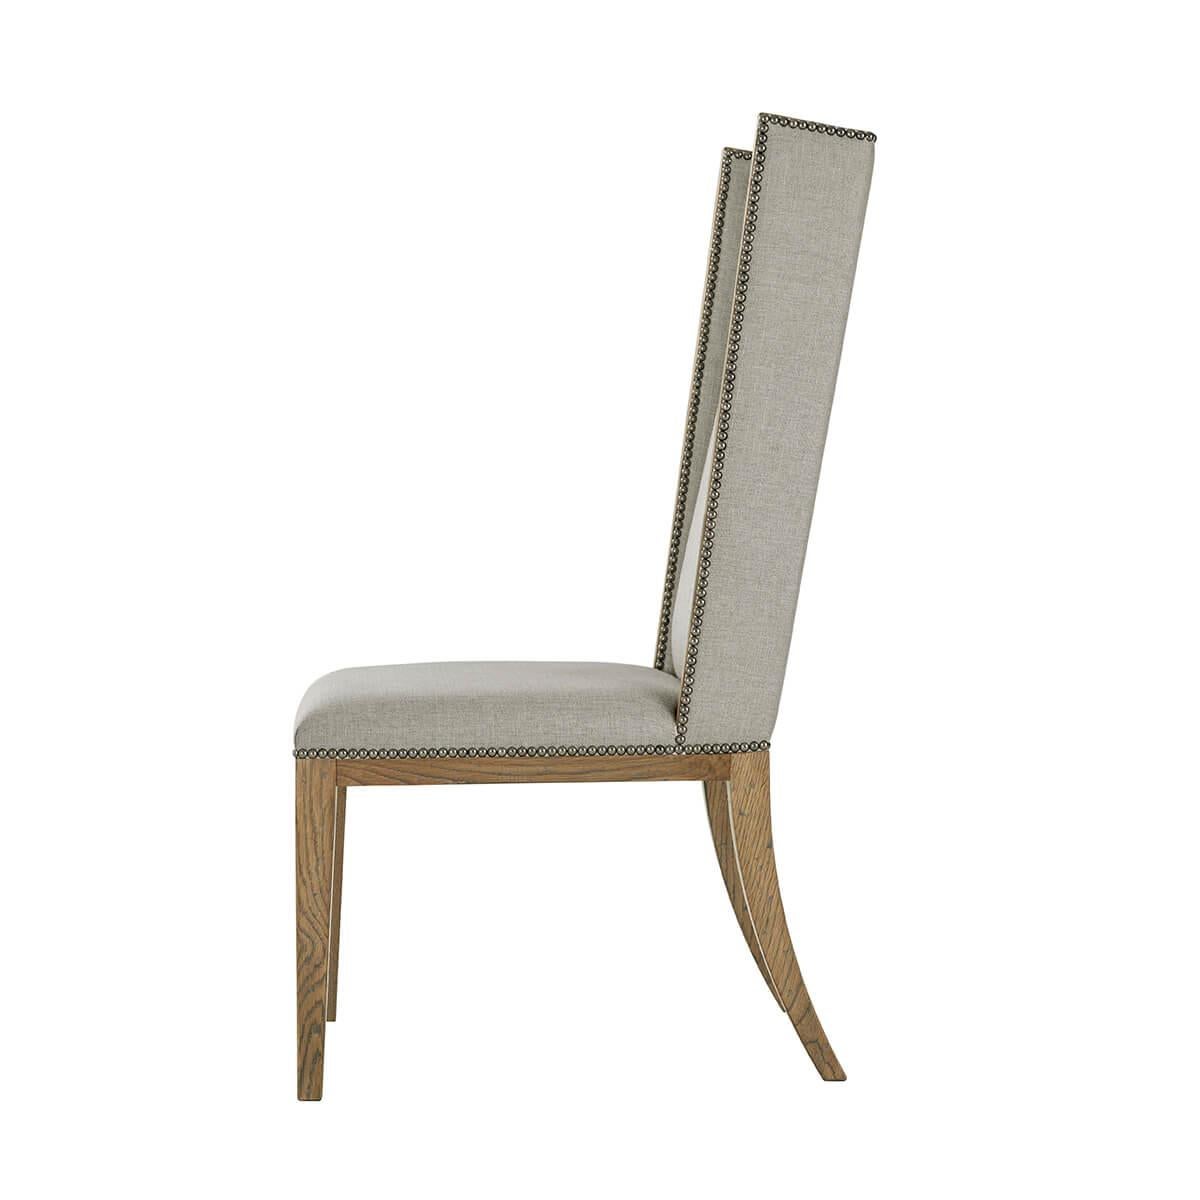 Vietnamese Modern Oak Upholstered Dining Chair For Sale